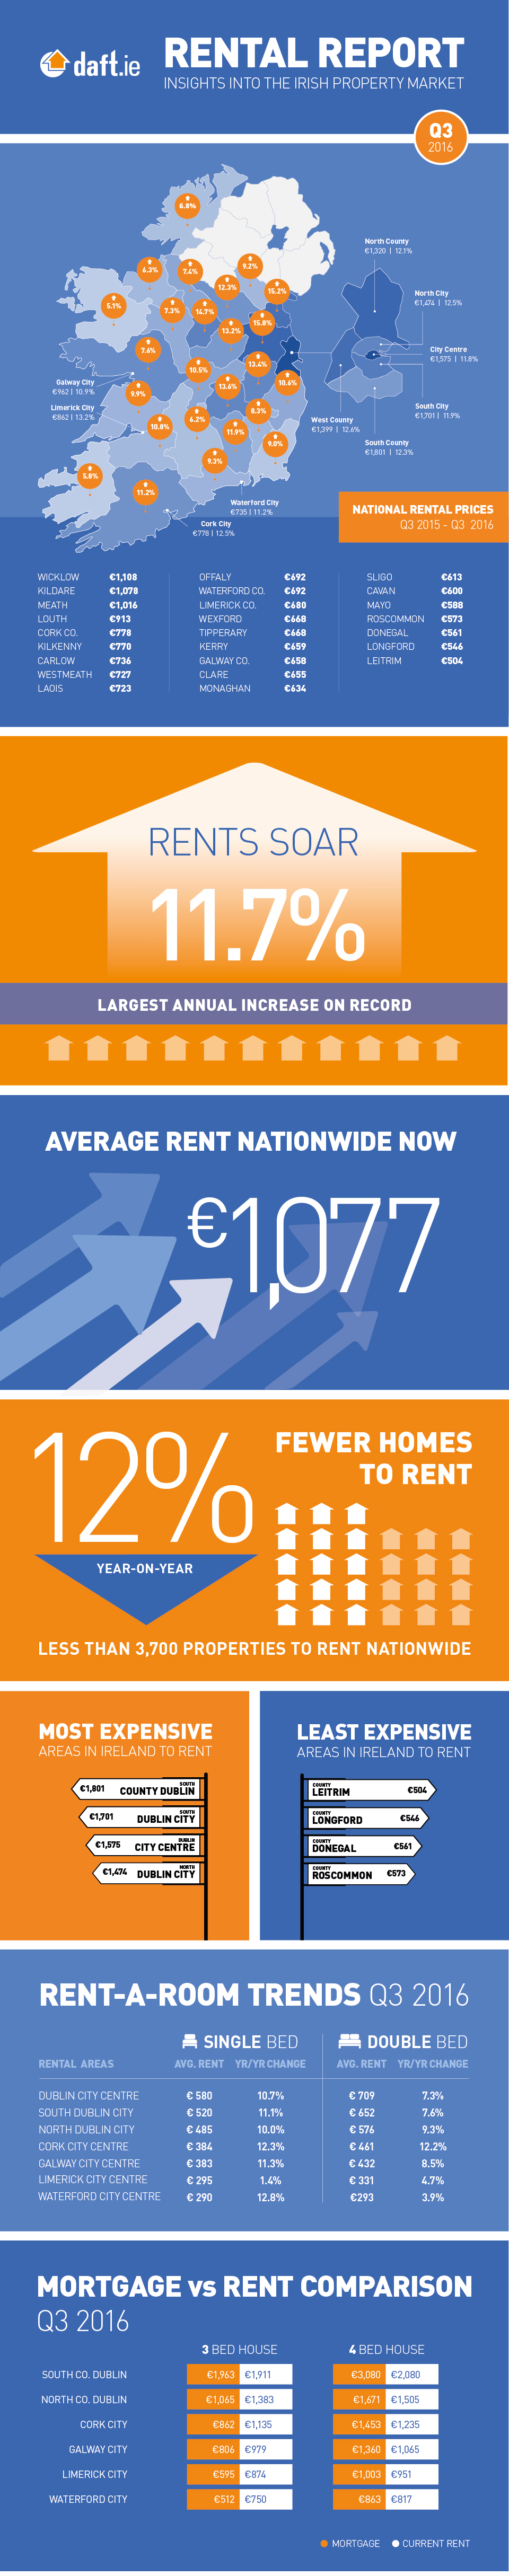 Daft.ie Rental Report: Q3 2016 Infographic